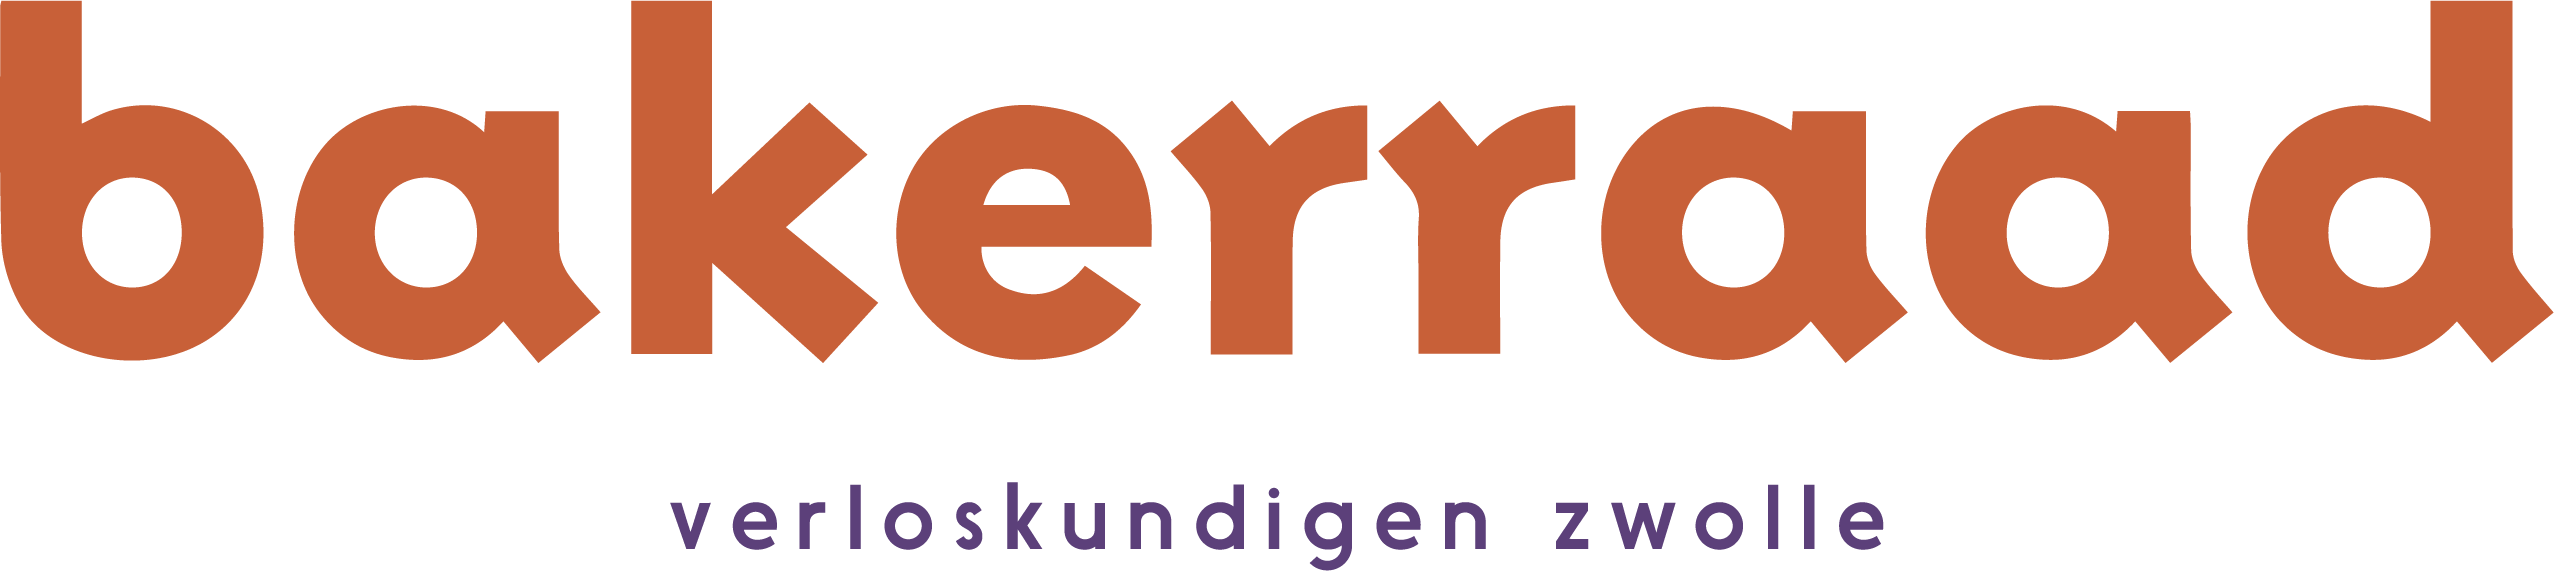 https://bakerraad.nl/wp-content/uploads/2021/06/BAKERRAAD_logo_rgb_oranje_onderregel.png